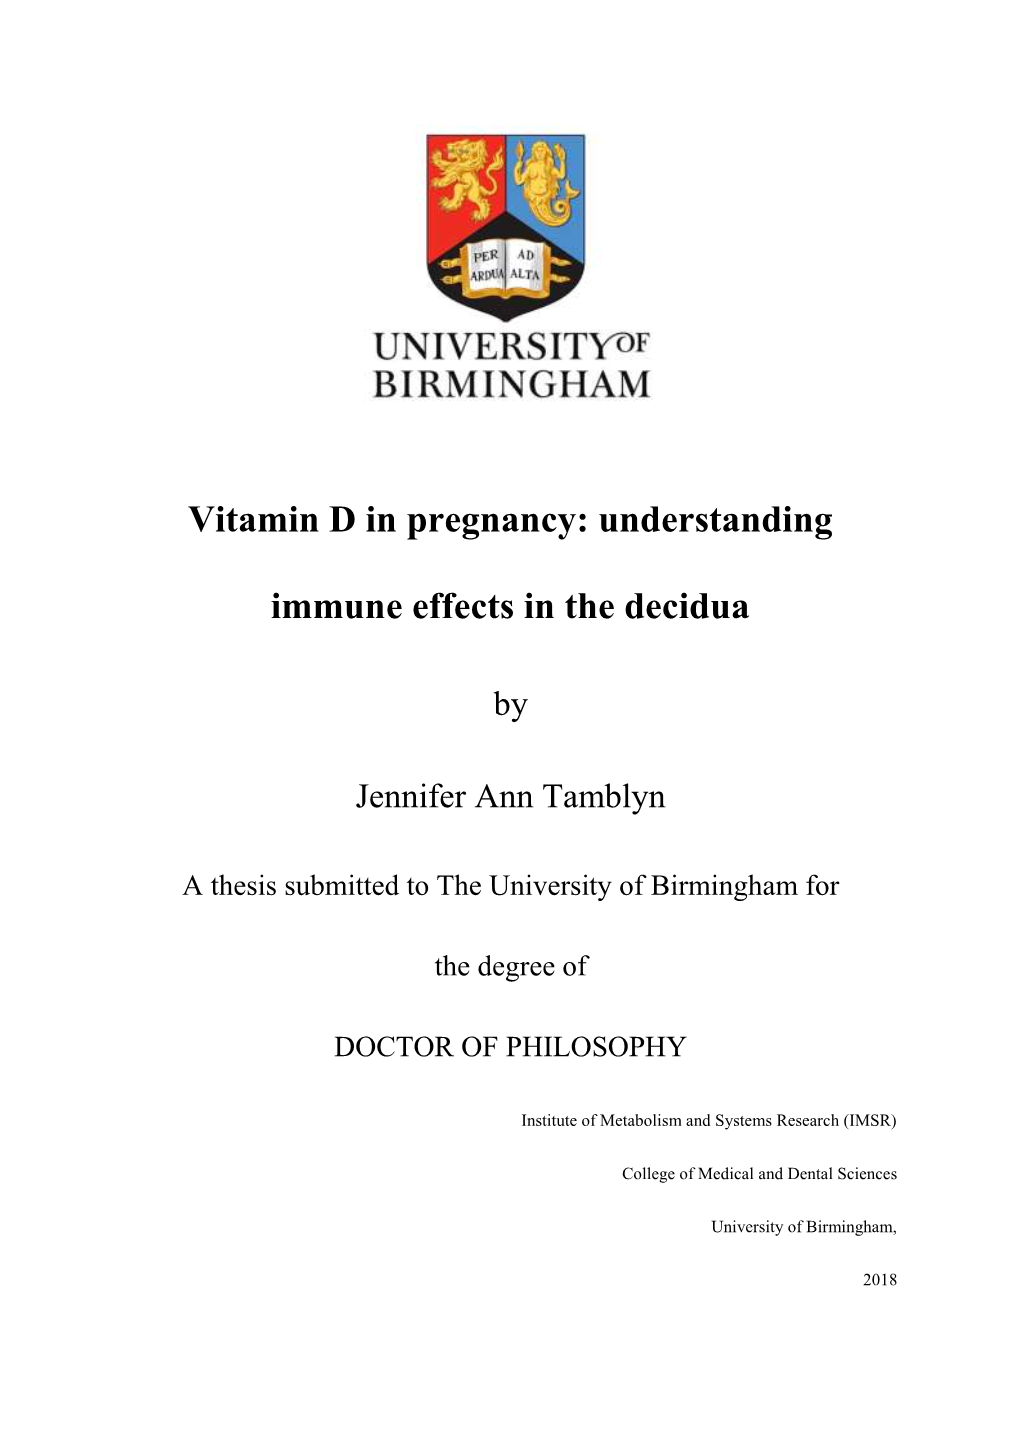 Vitamin D in Pregnancy: Understanding Immune